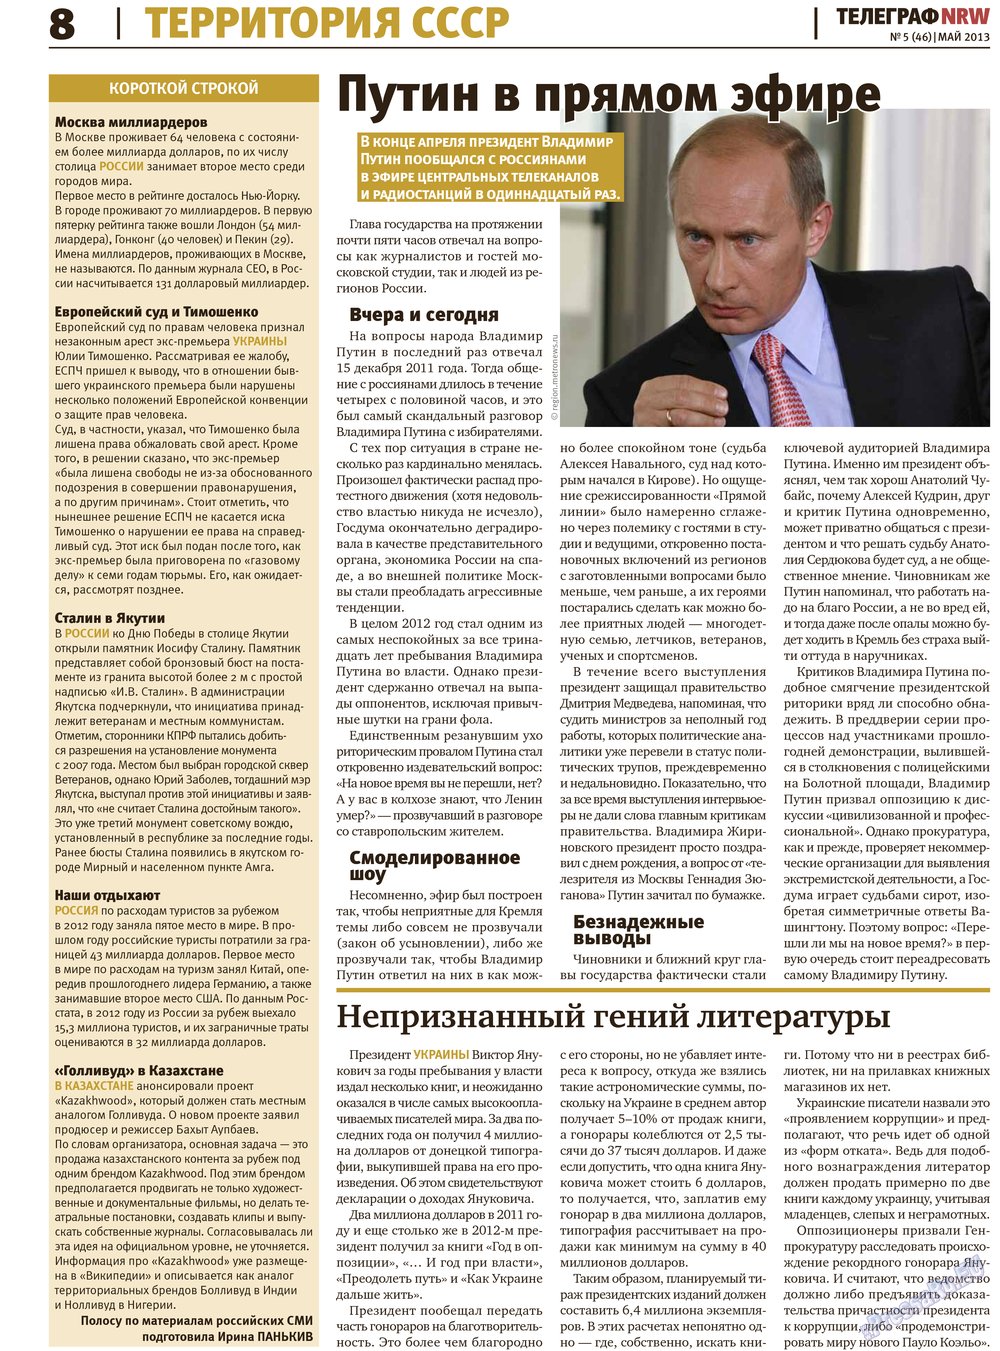 Телеграф NRW, газета. 2013 №5 стр.8